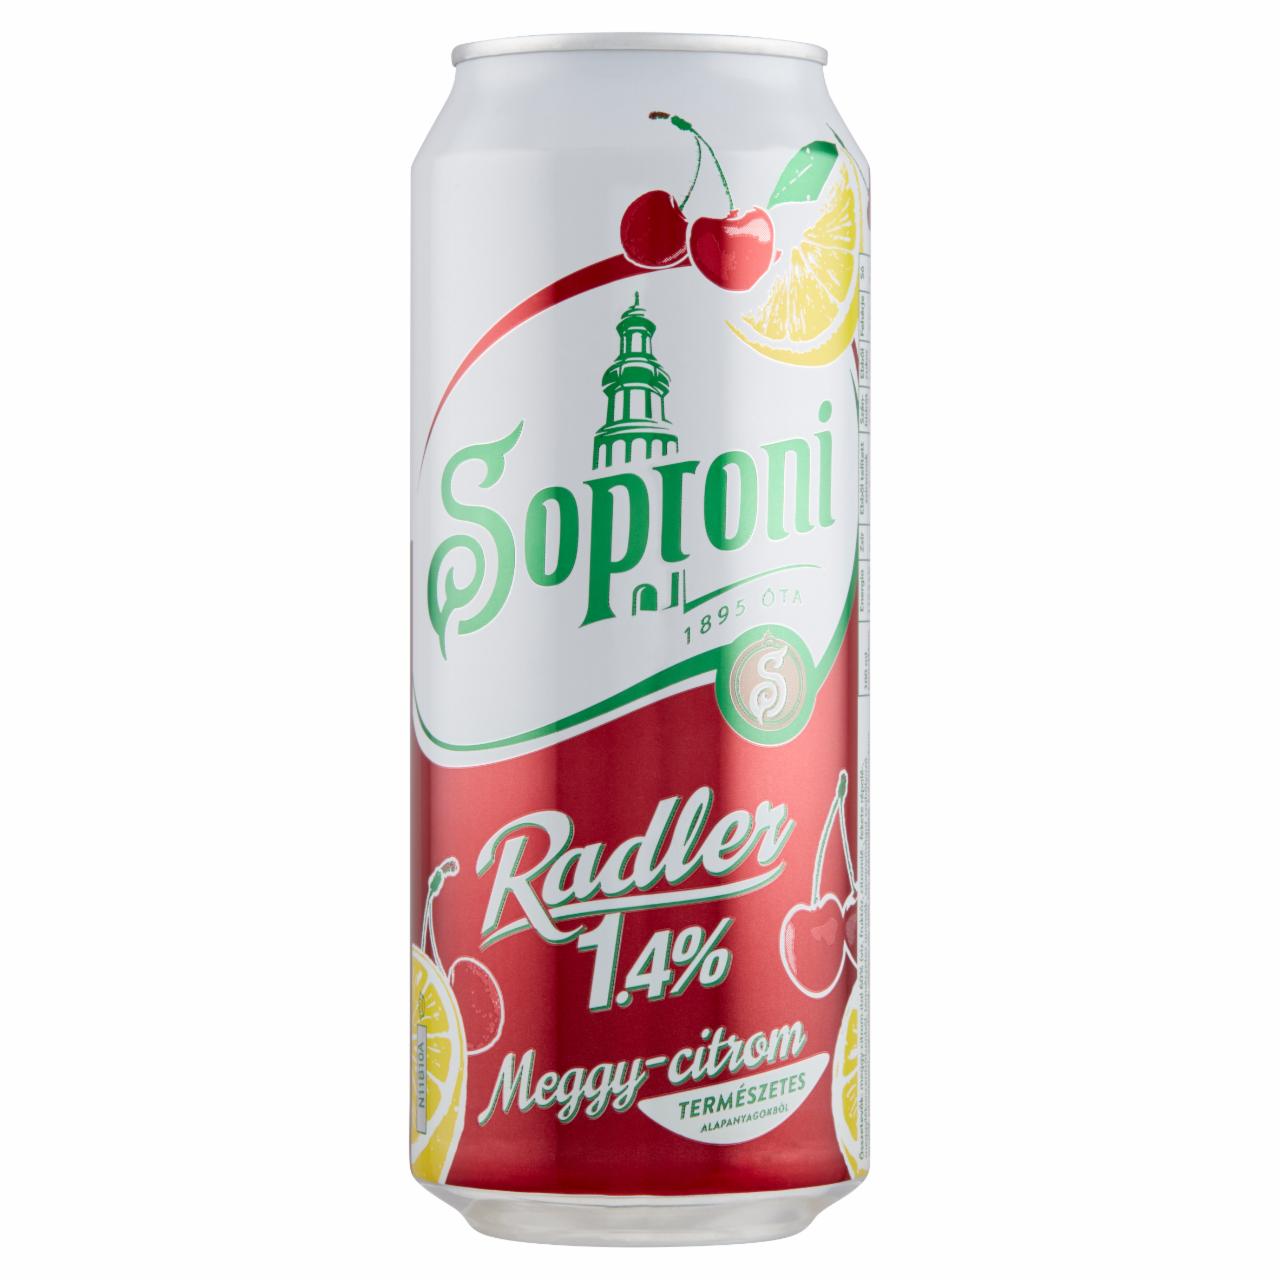 Képek - Soproni Radler meggy-citromos sörital 1,4% 0,5 l doboz